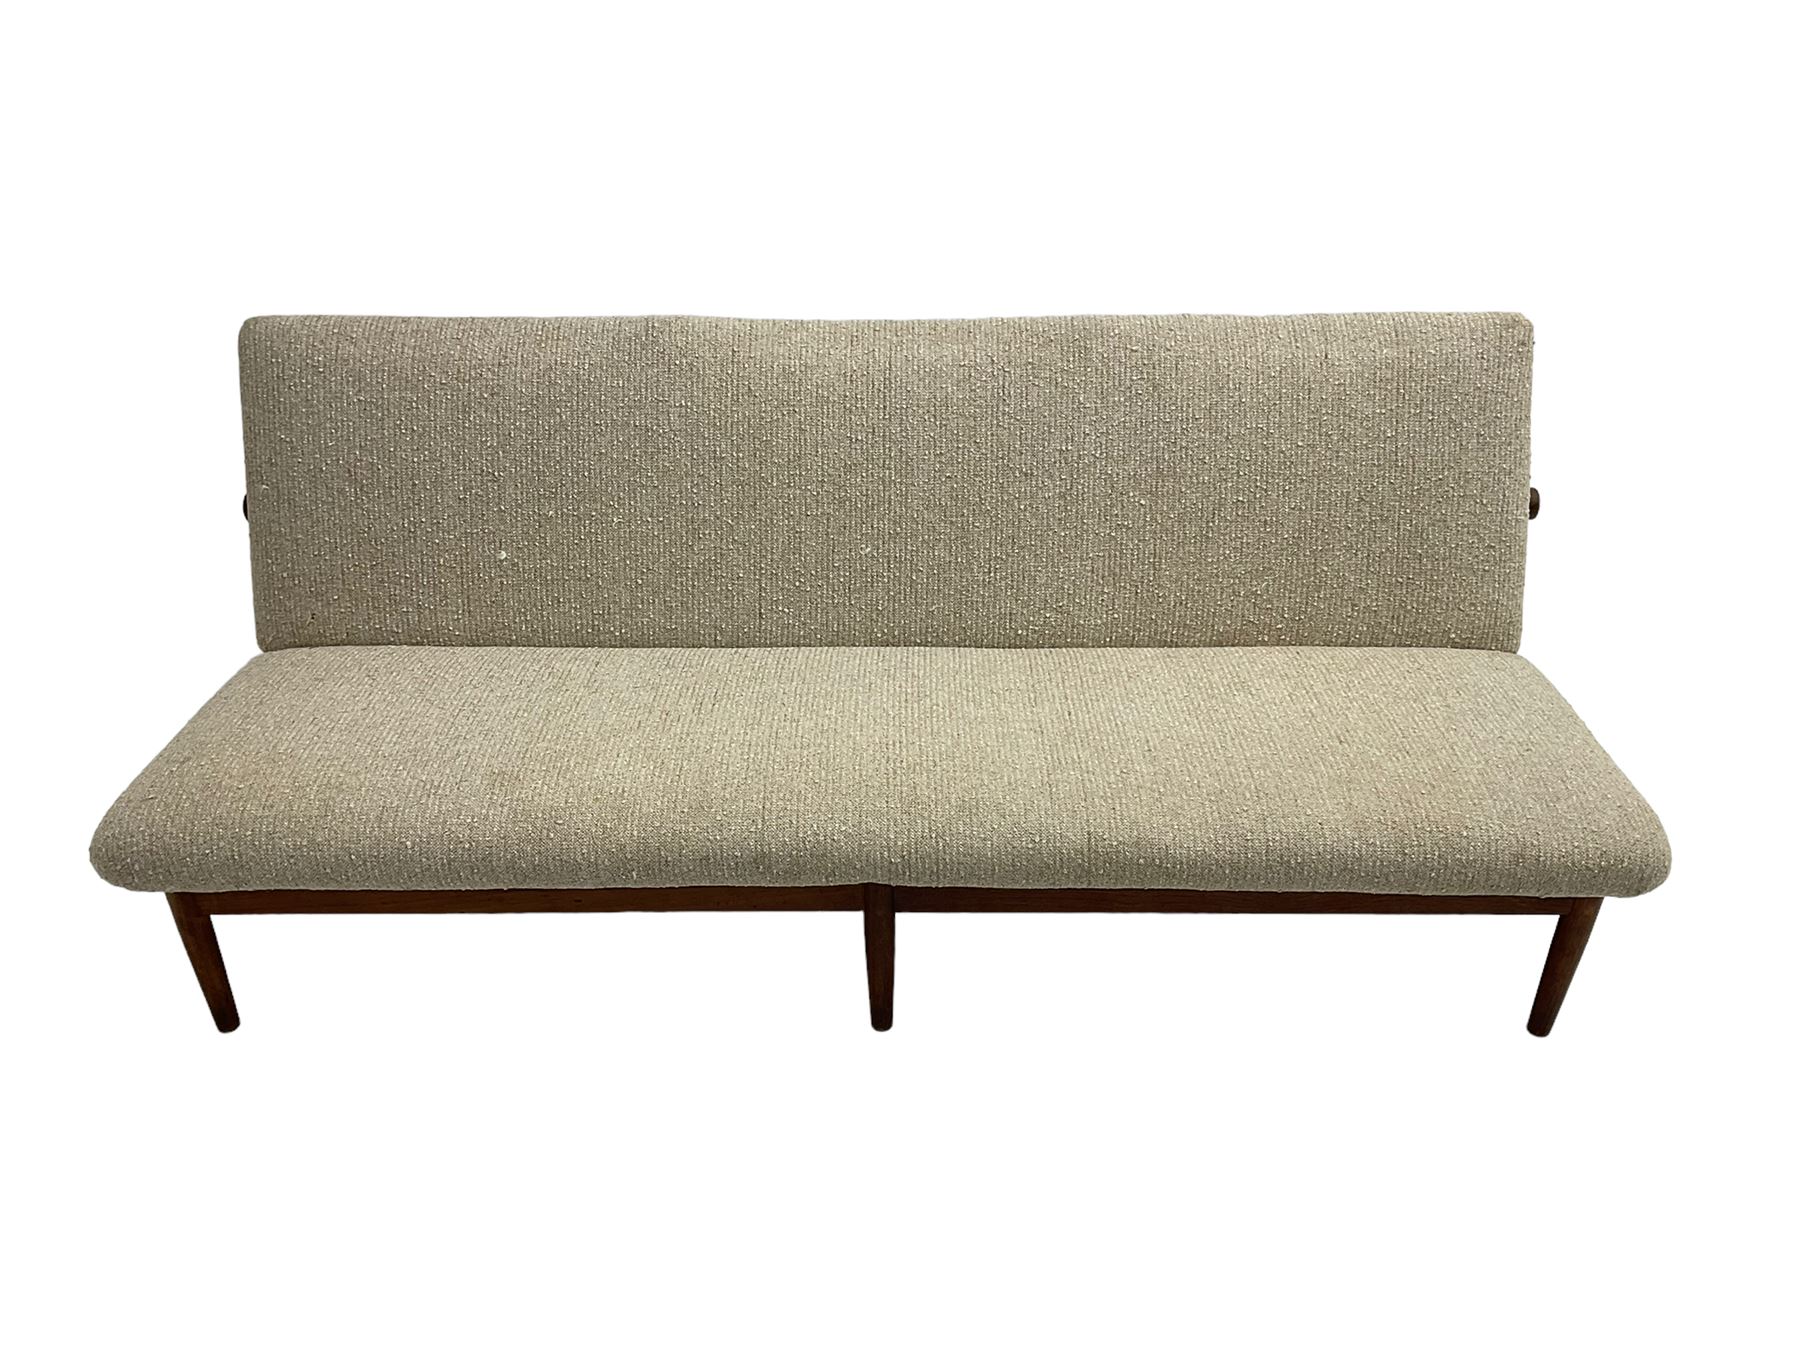 Finn Juhl for France & Son - 'Japan' mid-20th century teak three seat sofa upholstered in beige fabr - Image 2 of 6